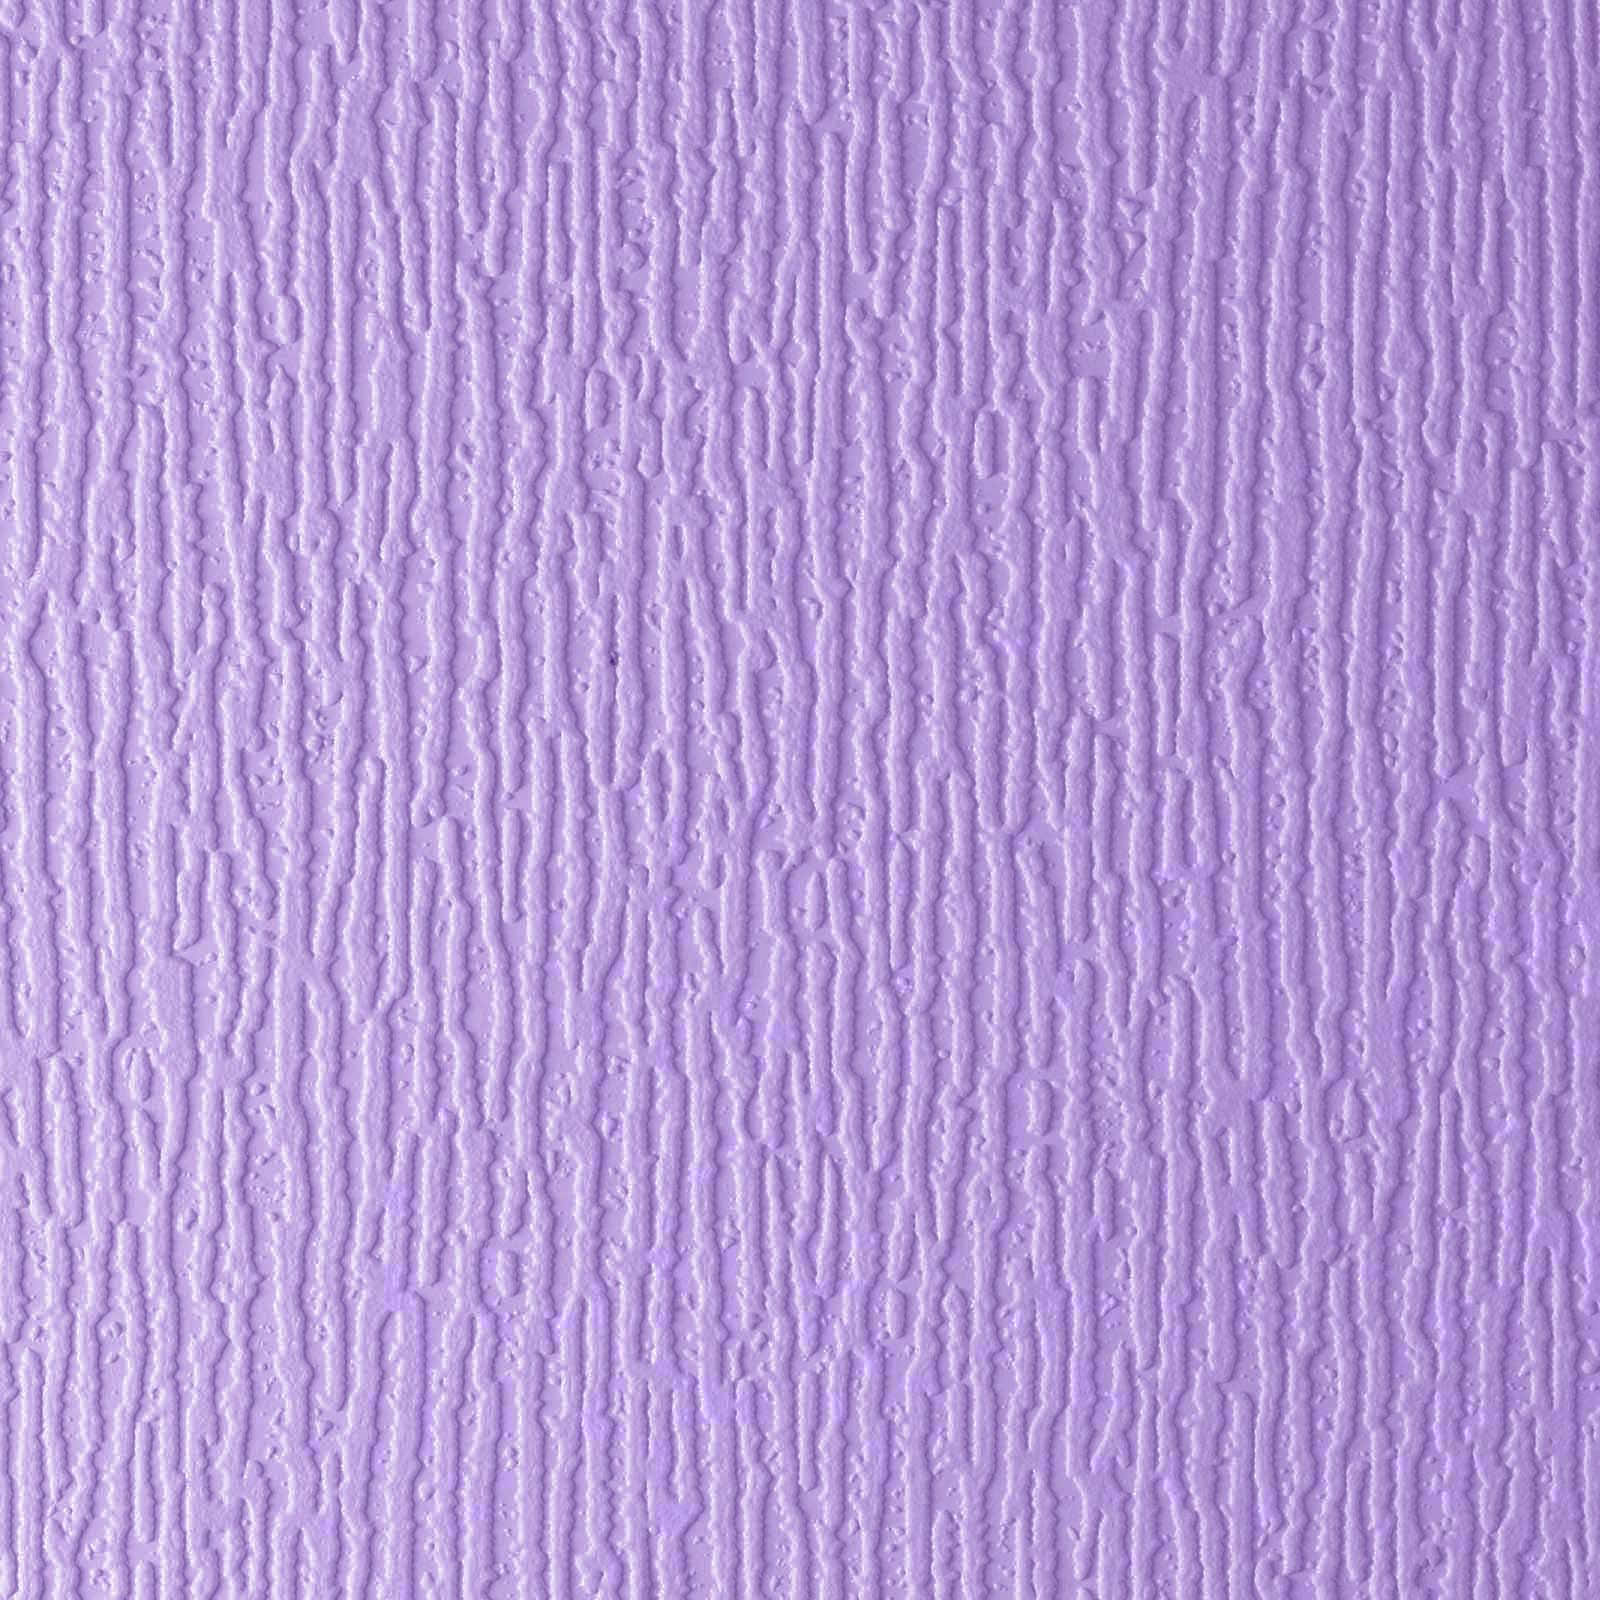 Lilalavendelwand Mit Gerippter Textur Wallpaper